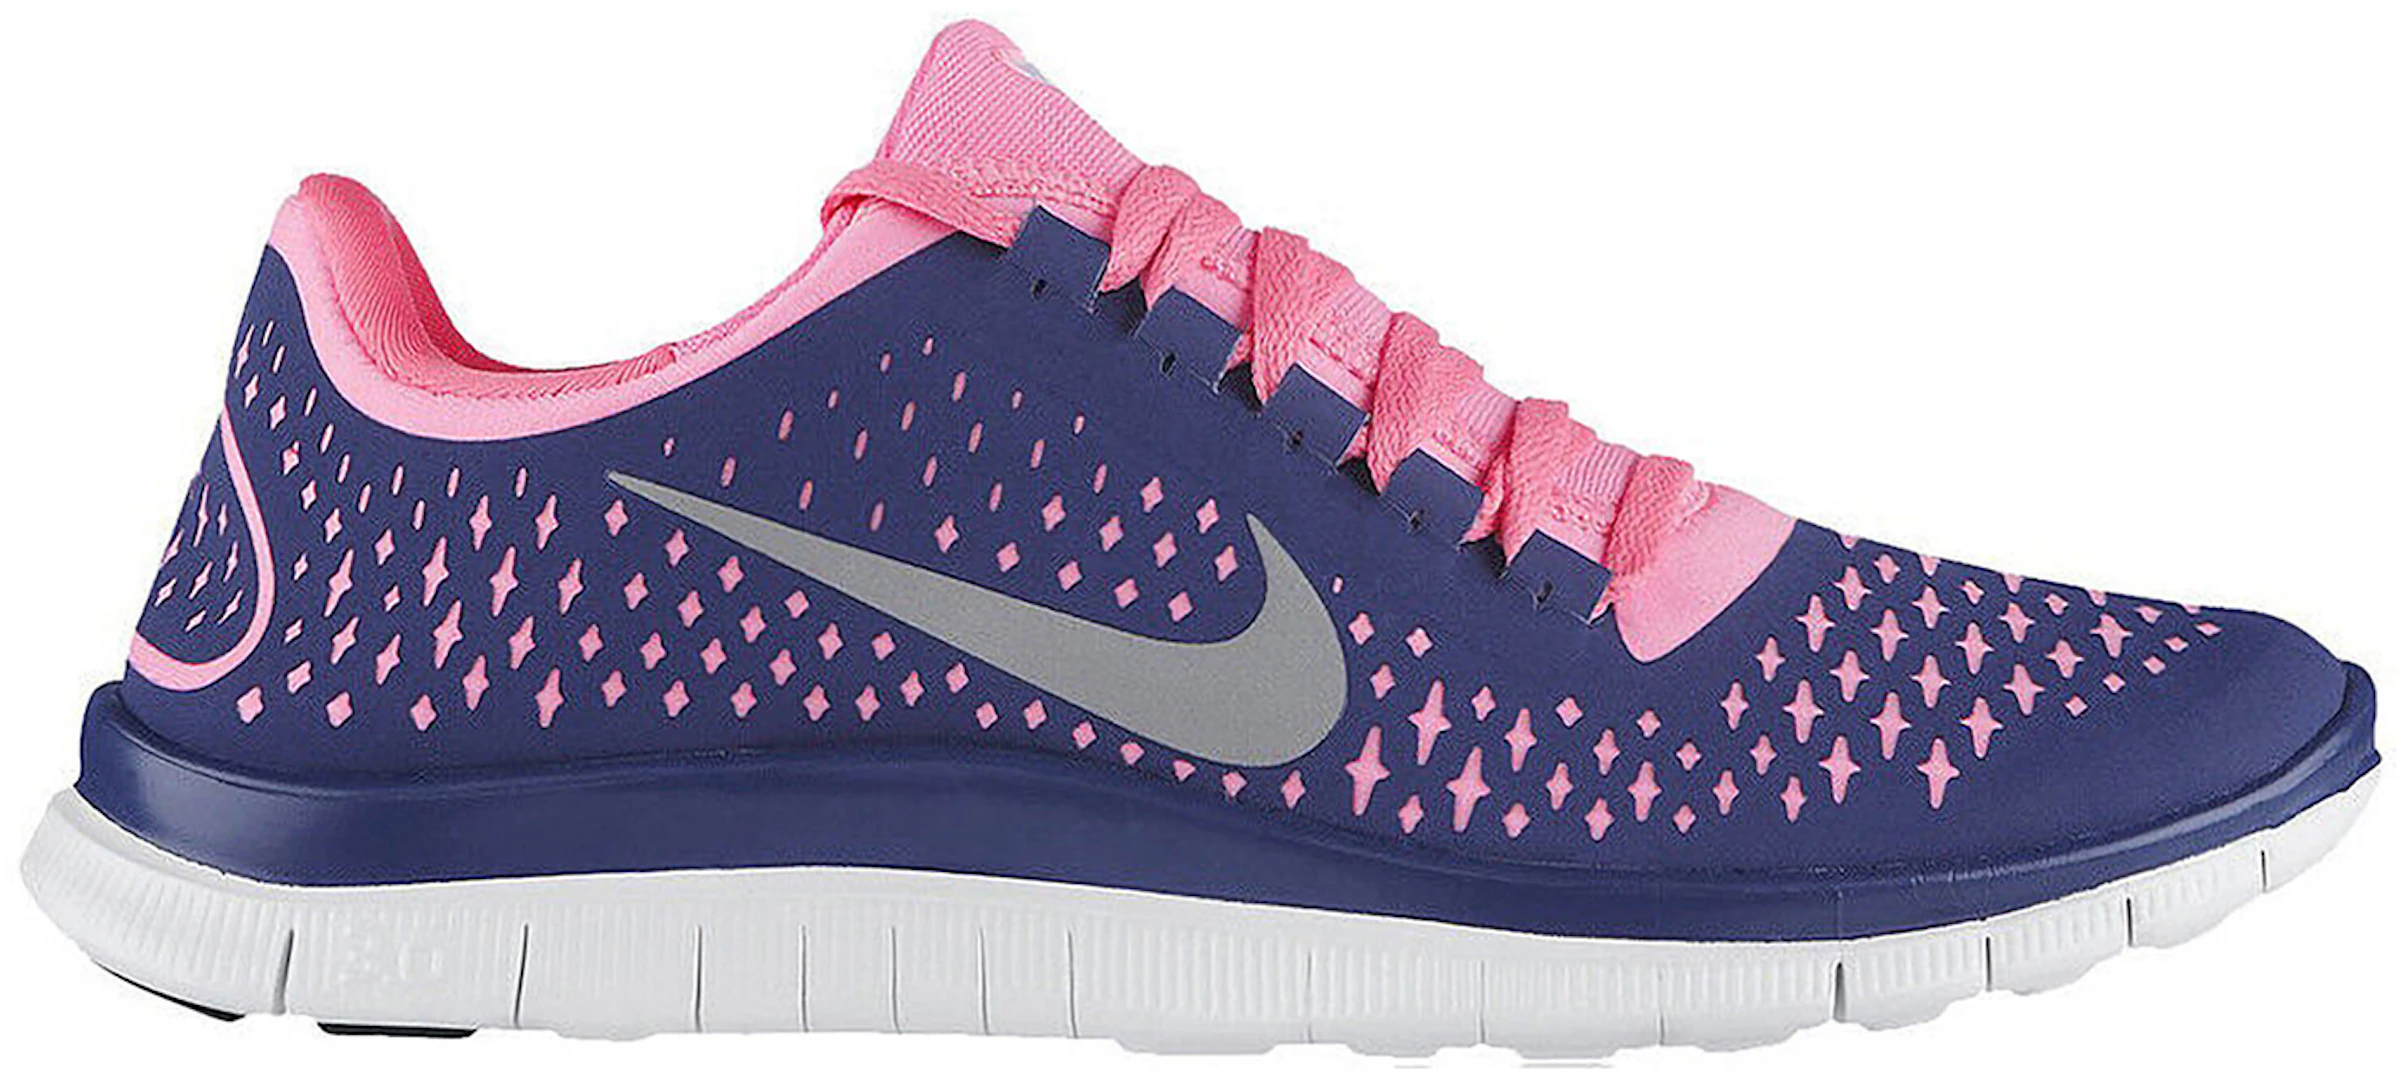 violento búnker salir Nike Free Run 3.0 V4 Deep Royal Blue Pink (W) - 511495-406 - ES